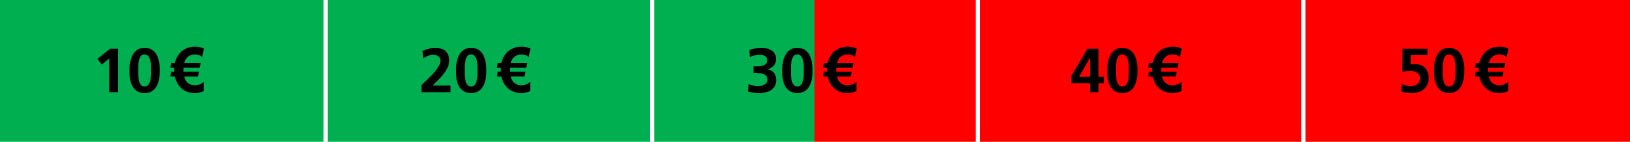 50er 25 Euro